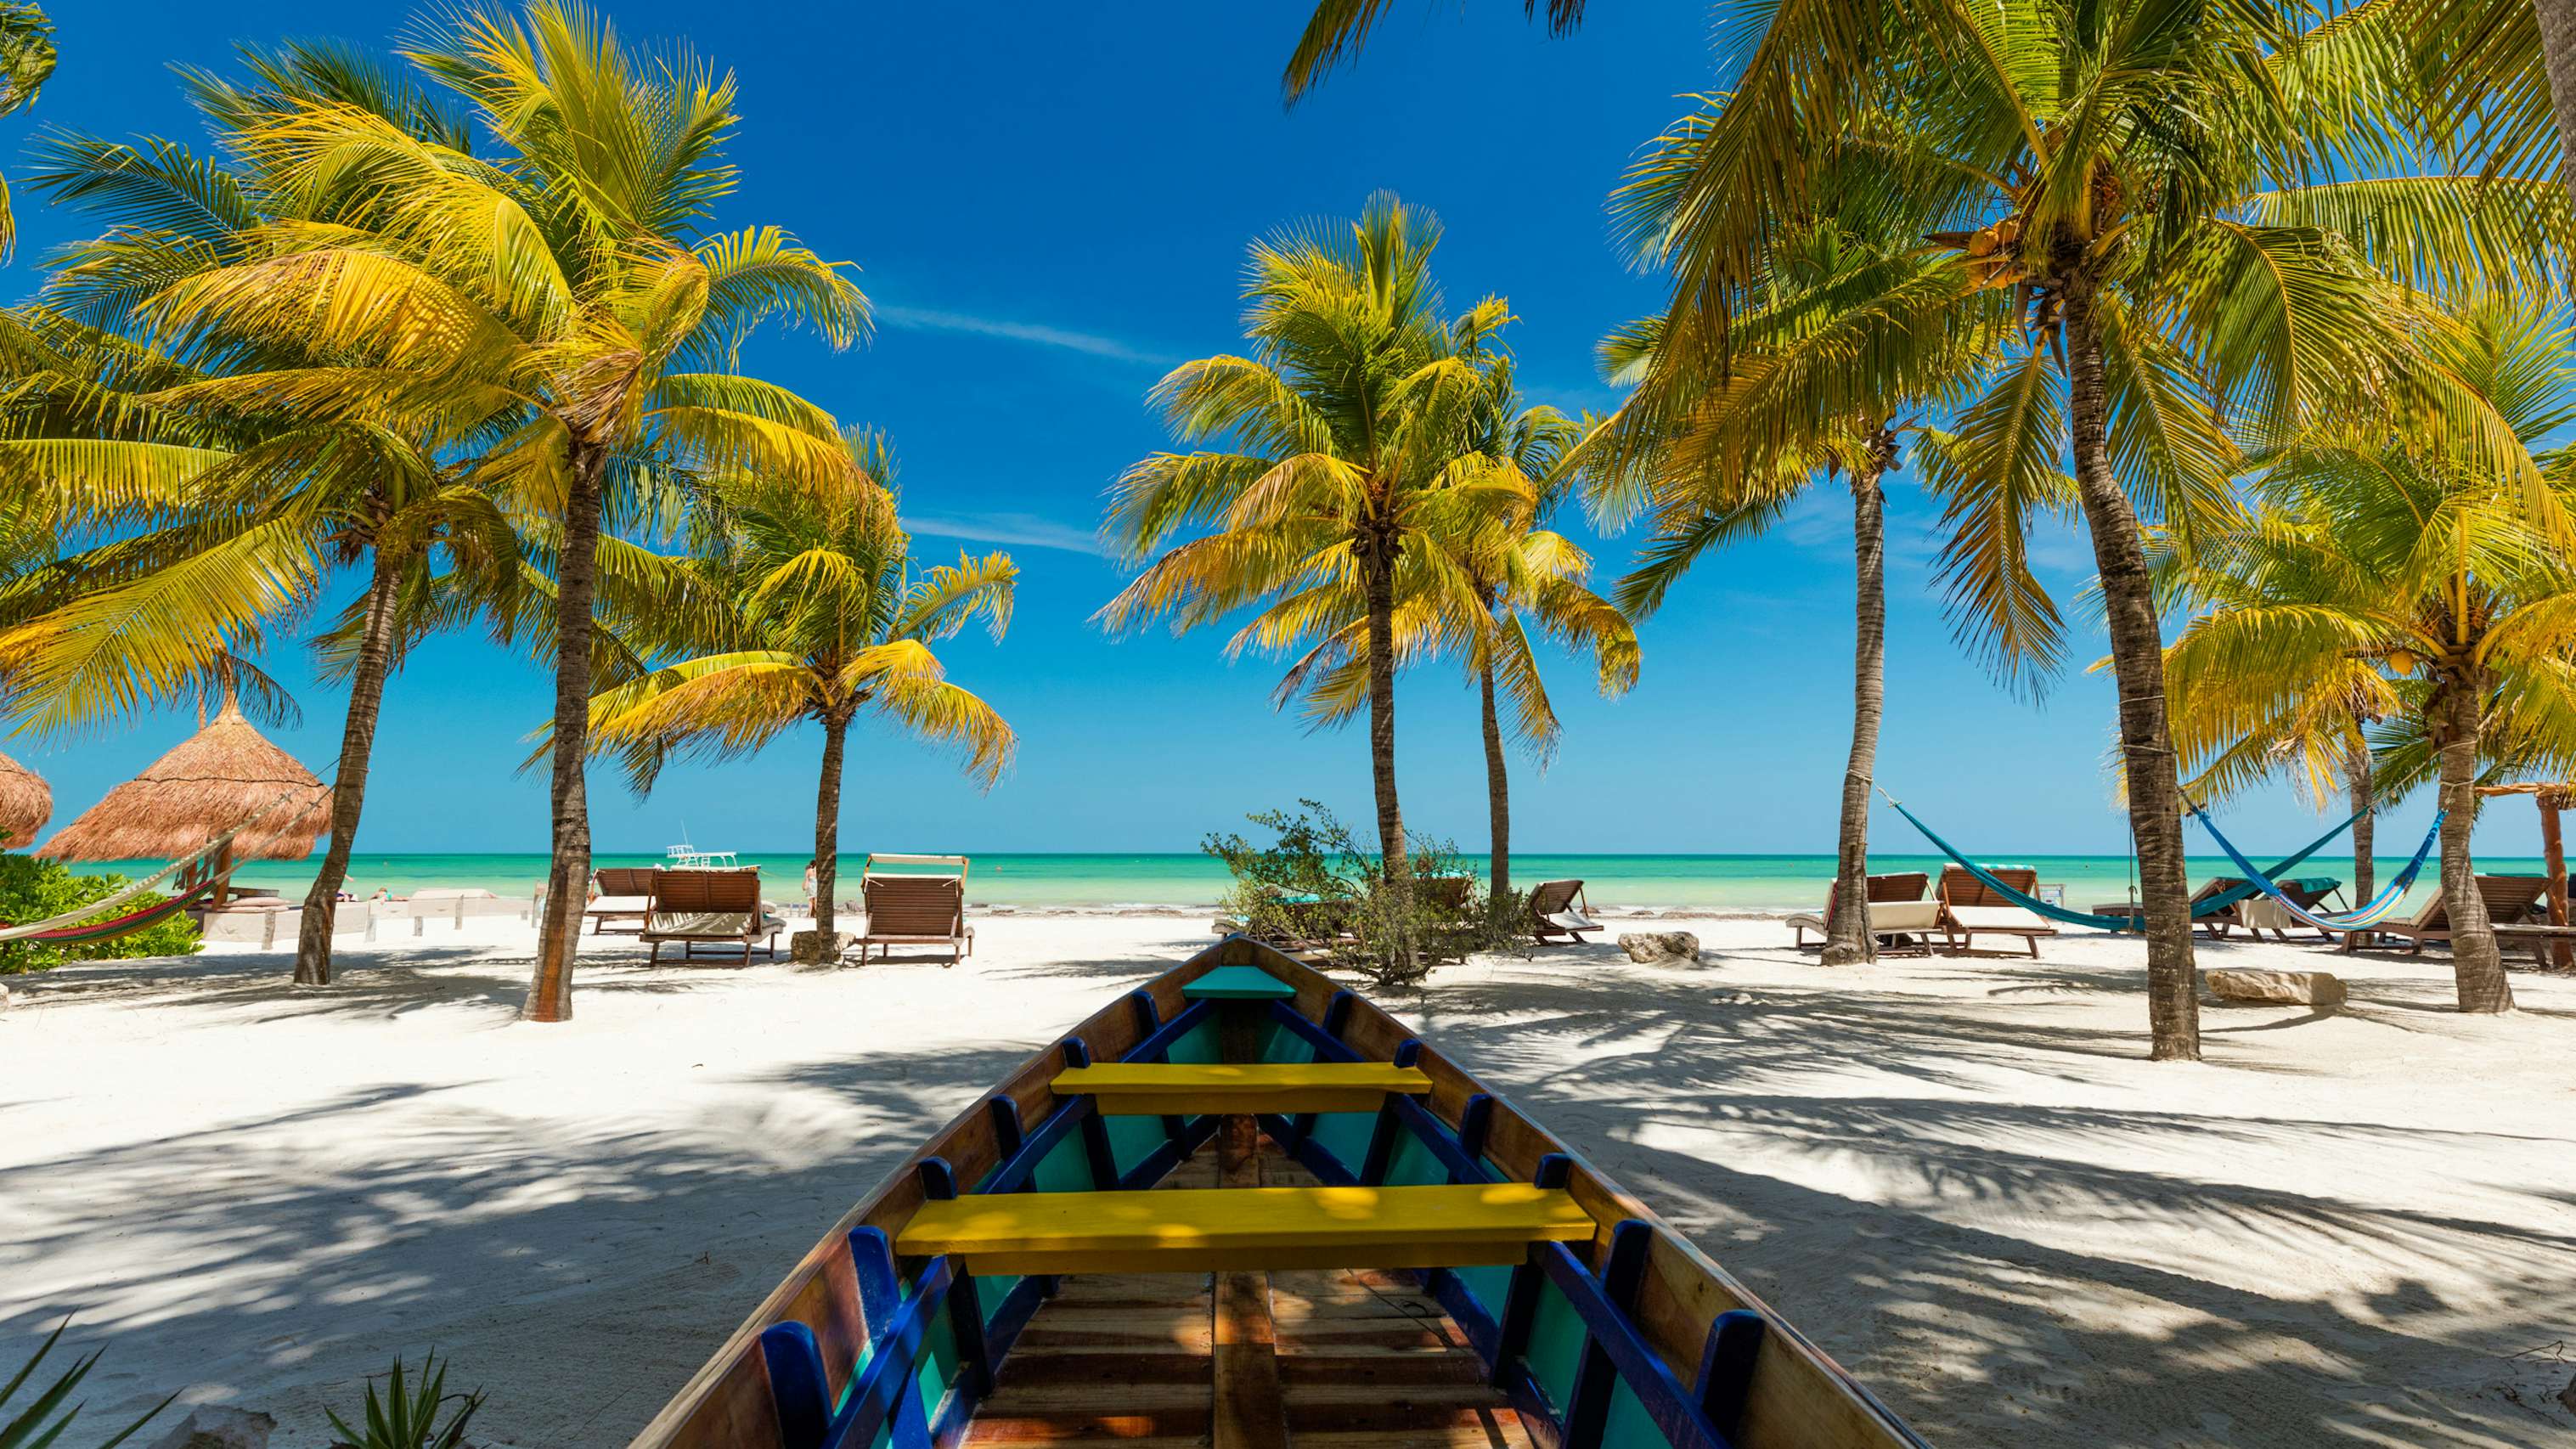 Mexico Holbox Yacht Charter - Tropical beach setting on Isla Holbox, Quintana Roo, Mexico with shady palm trees